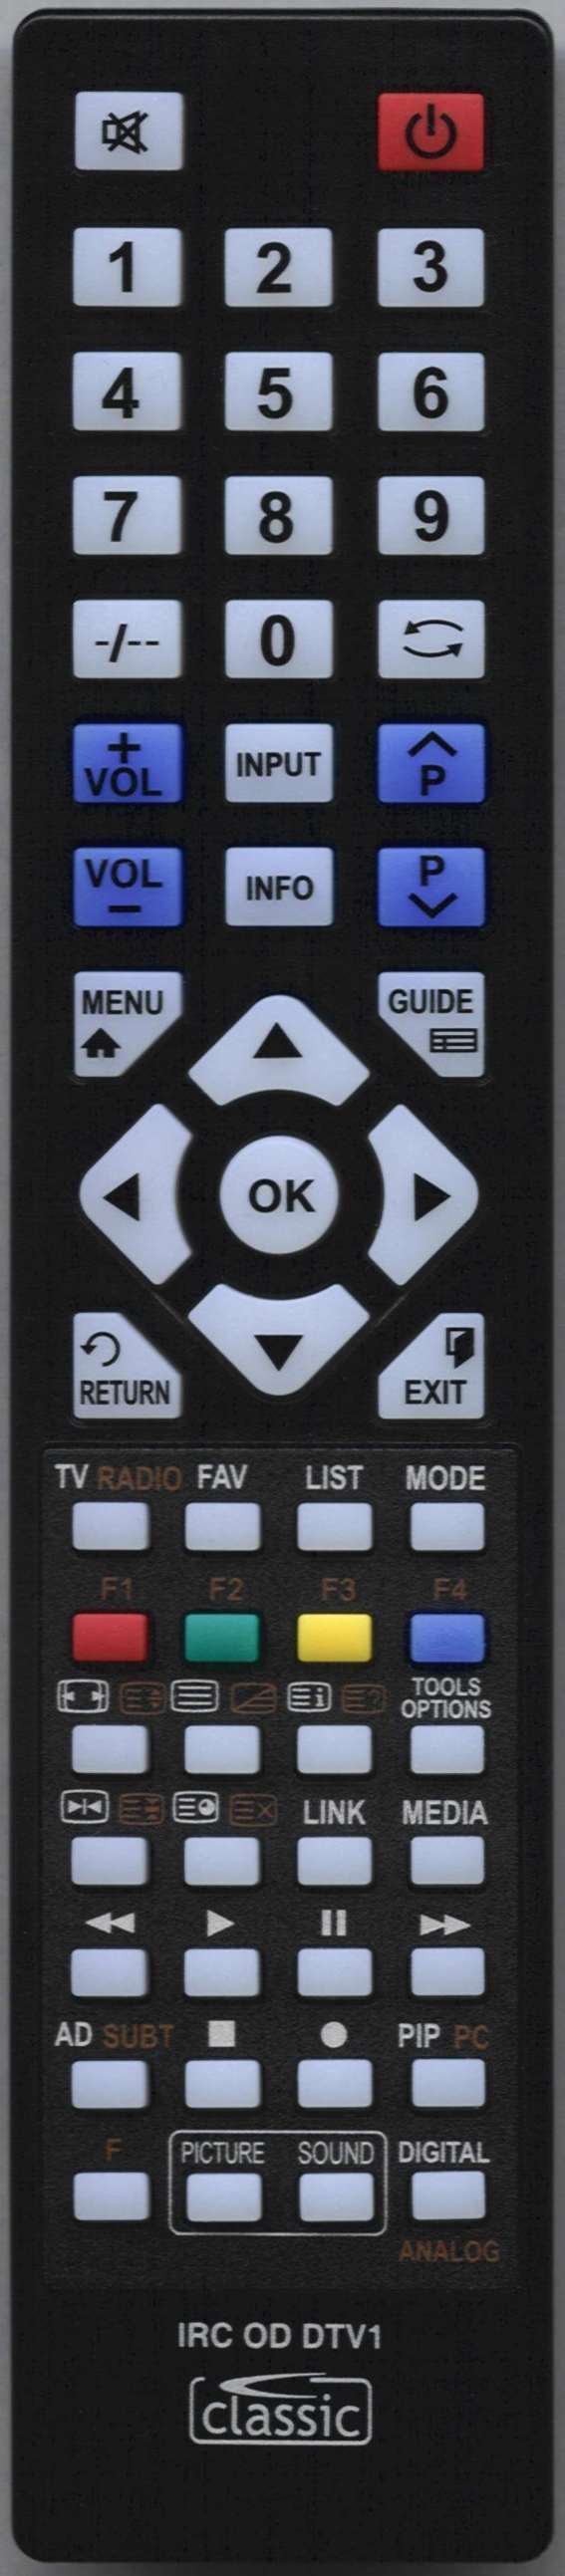 LG 49UN71006LB Remote Control Alternative 